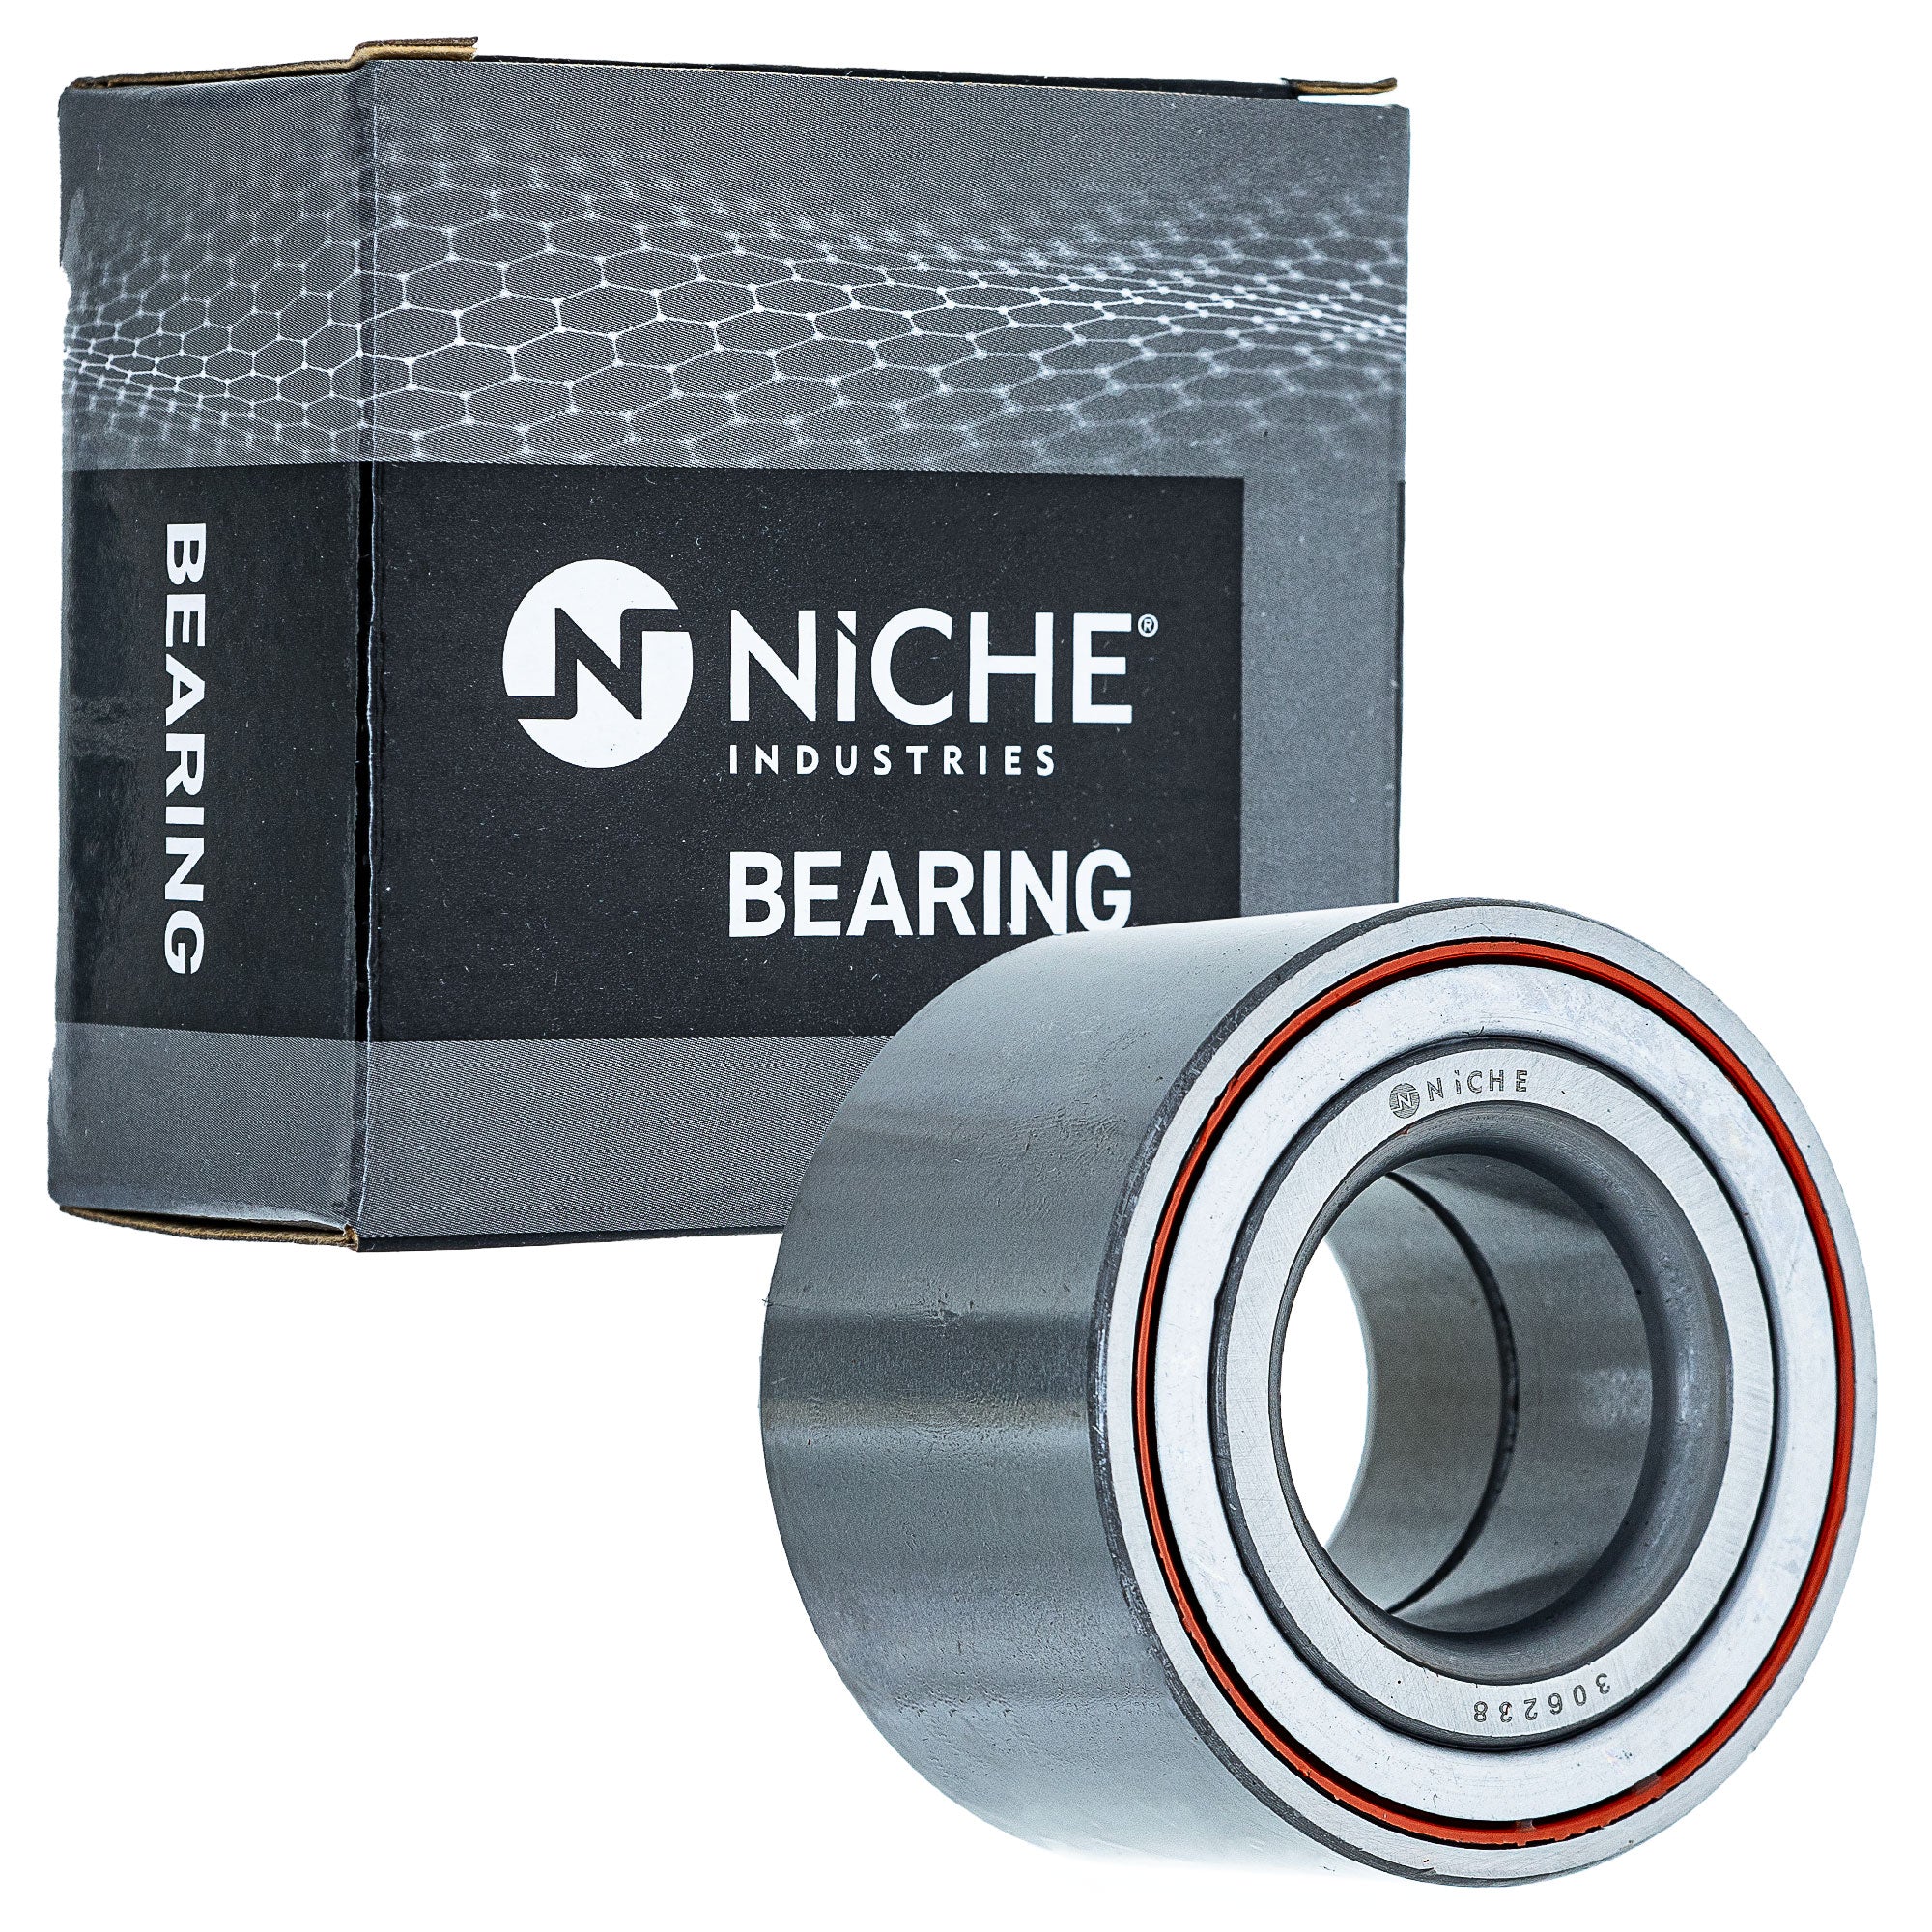 NICHE 519-CBB2203R Bearing for zOTHER Traxter Spyder